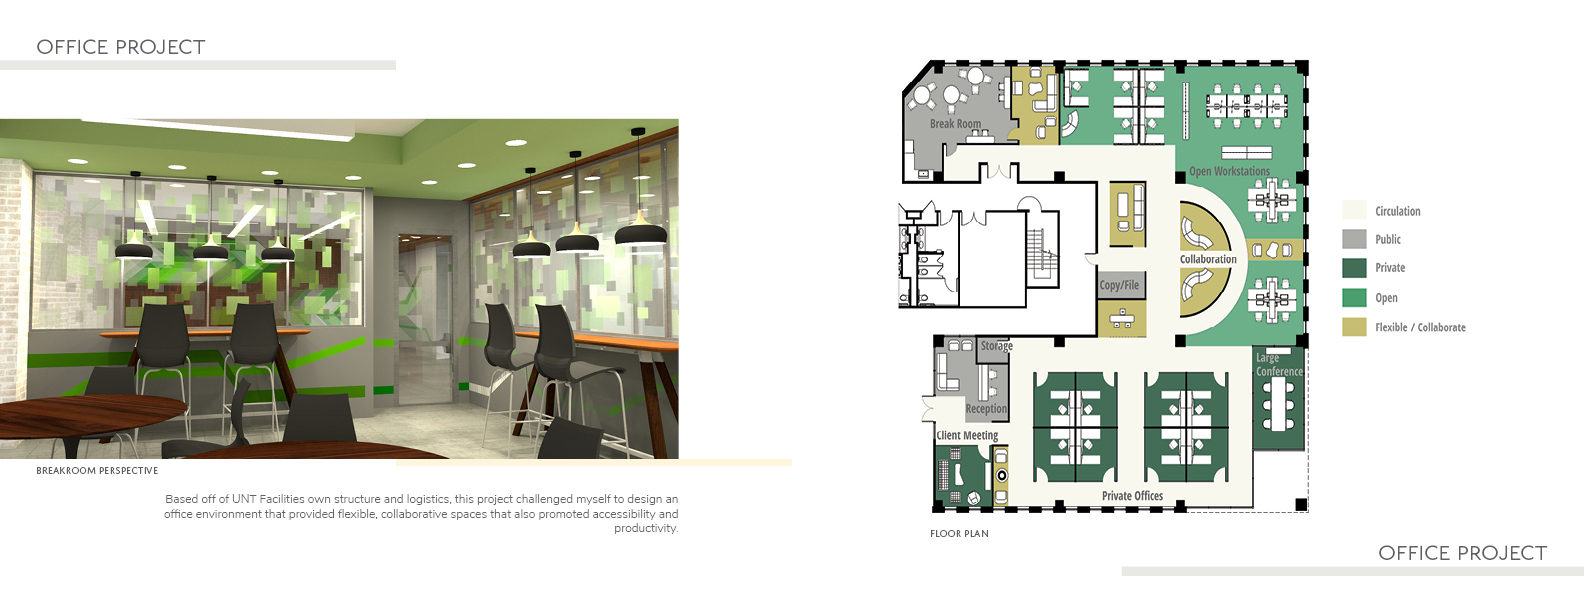 Office project - Floor plan and Breakroom perspective